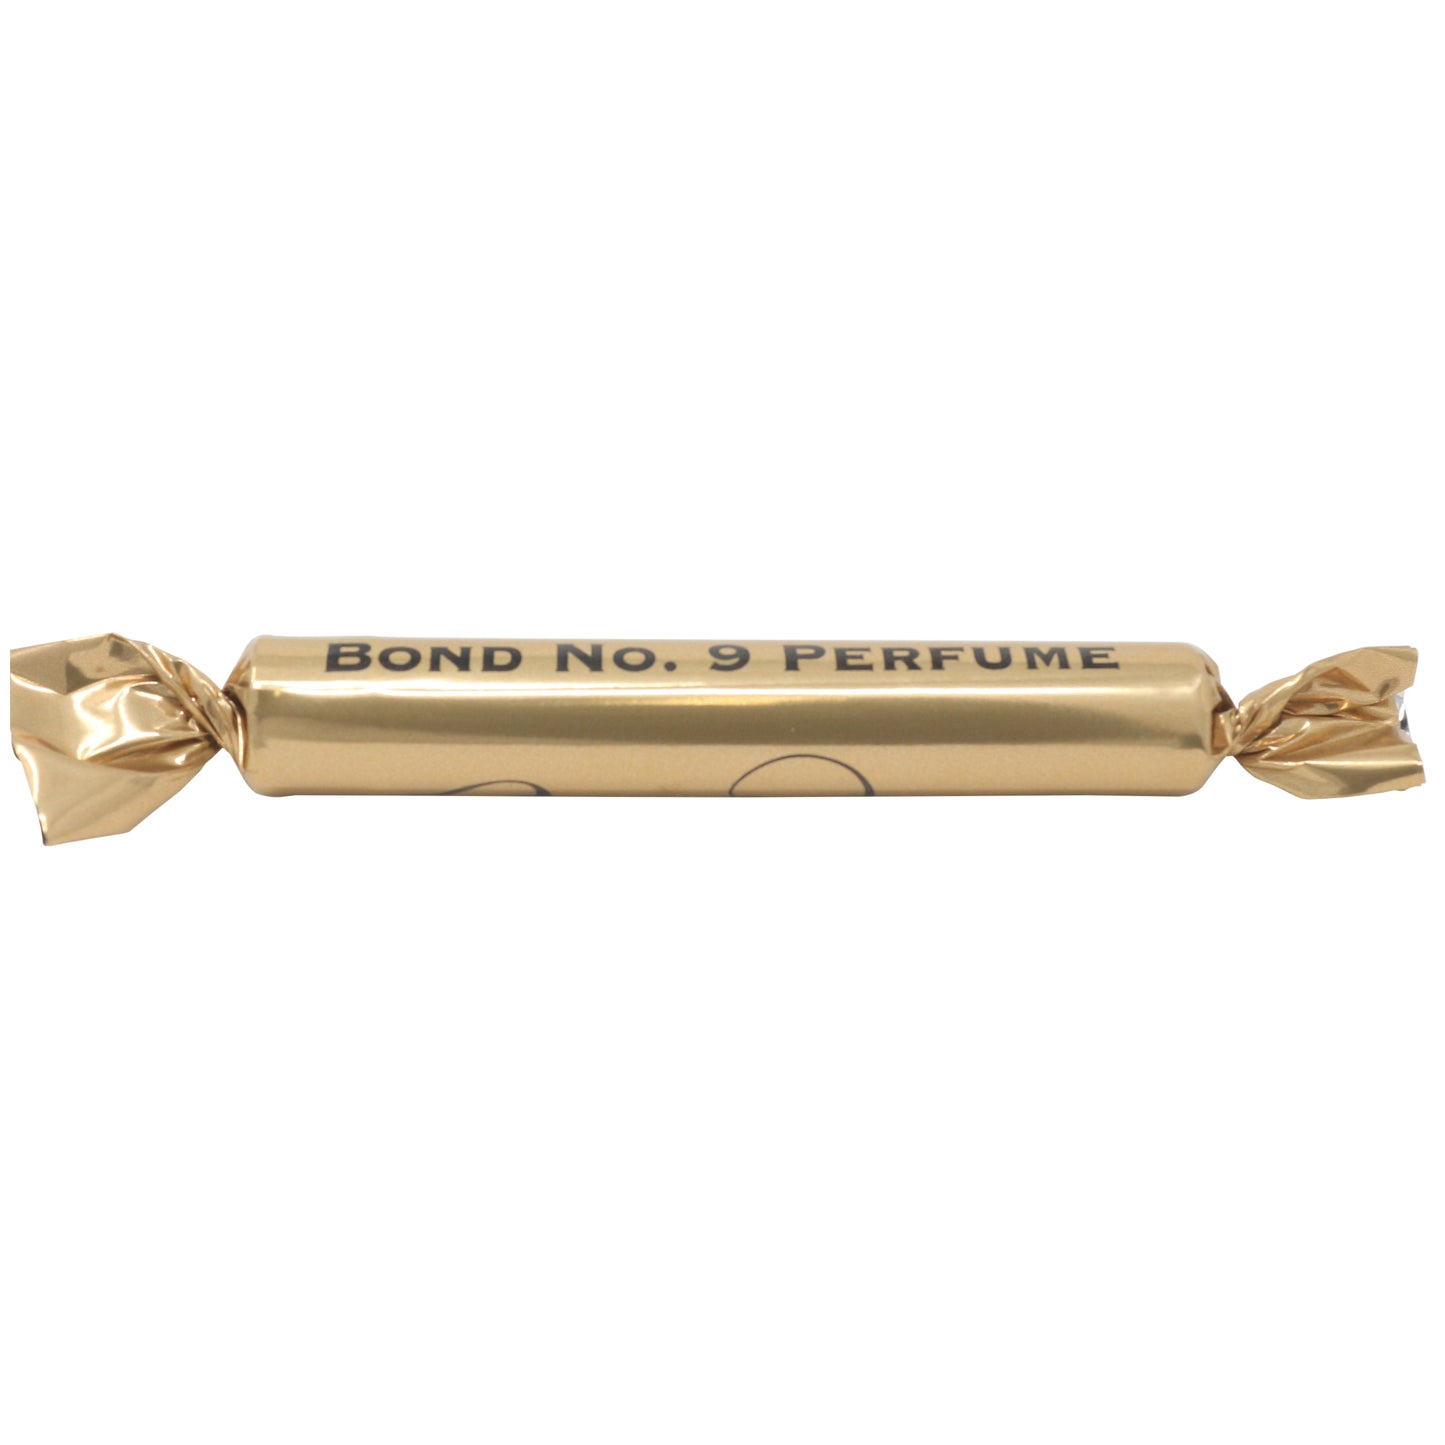 Bond No. 9 Bond No. 9 Parfume 1.7ml 0.054 Fl. Oz. officiel parfumeprøve